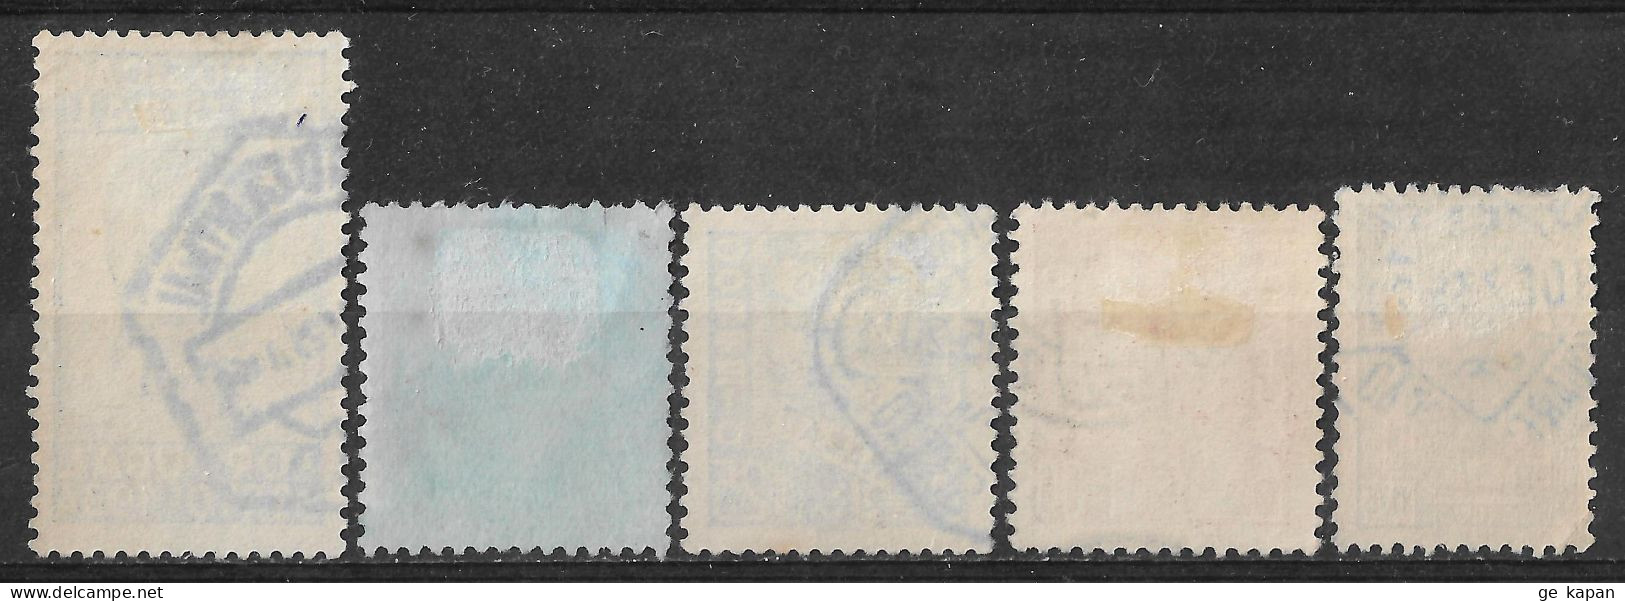 1934-1935 PORTUGAL SET OF 5 USED STAMPS (Michel # 580,585x,586,588,589) CV €22.30 - Usado